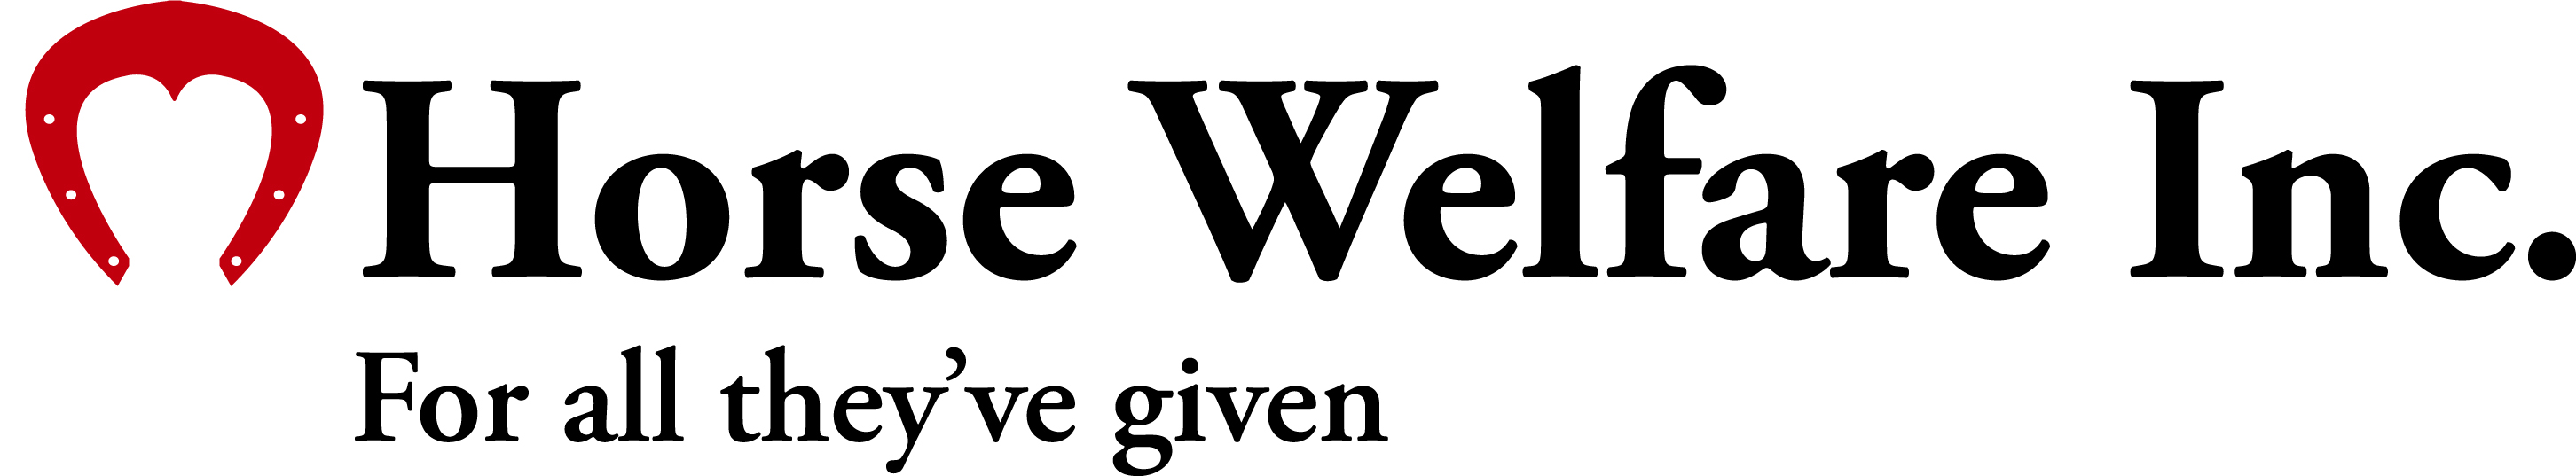 Horse Welfare Inc logo